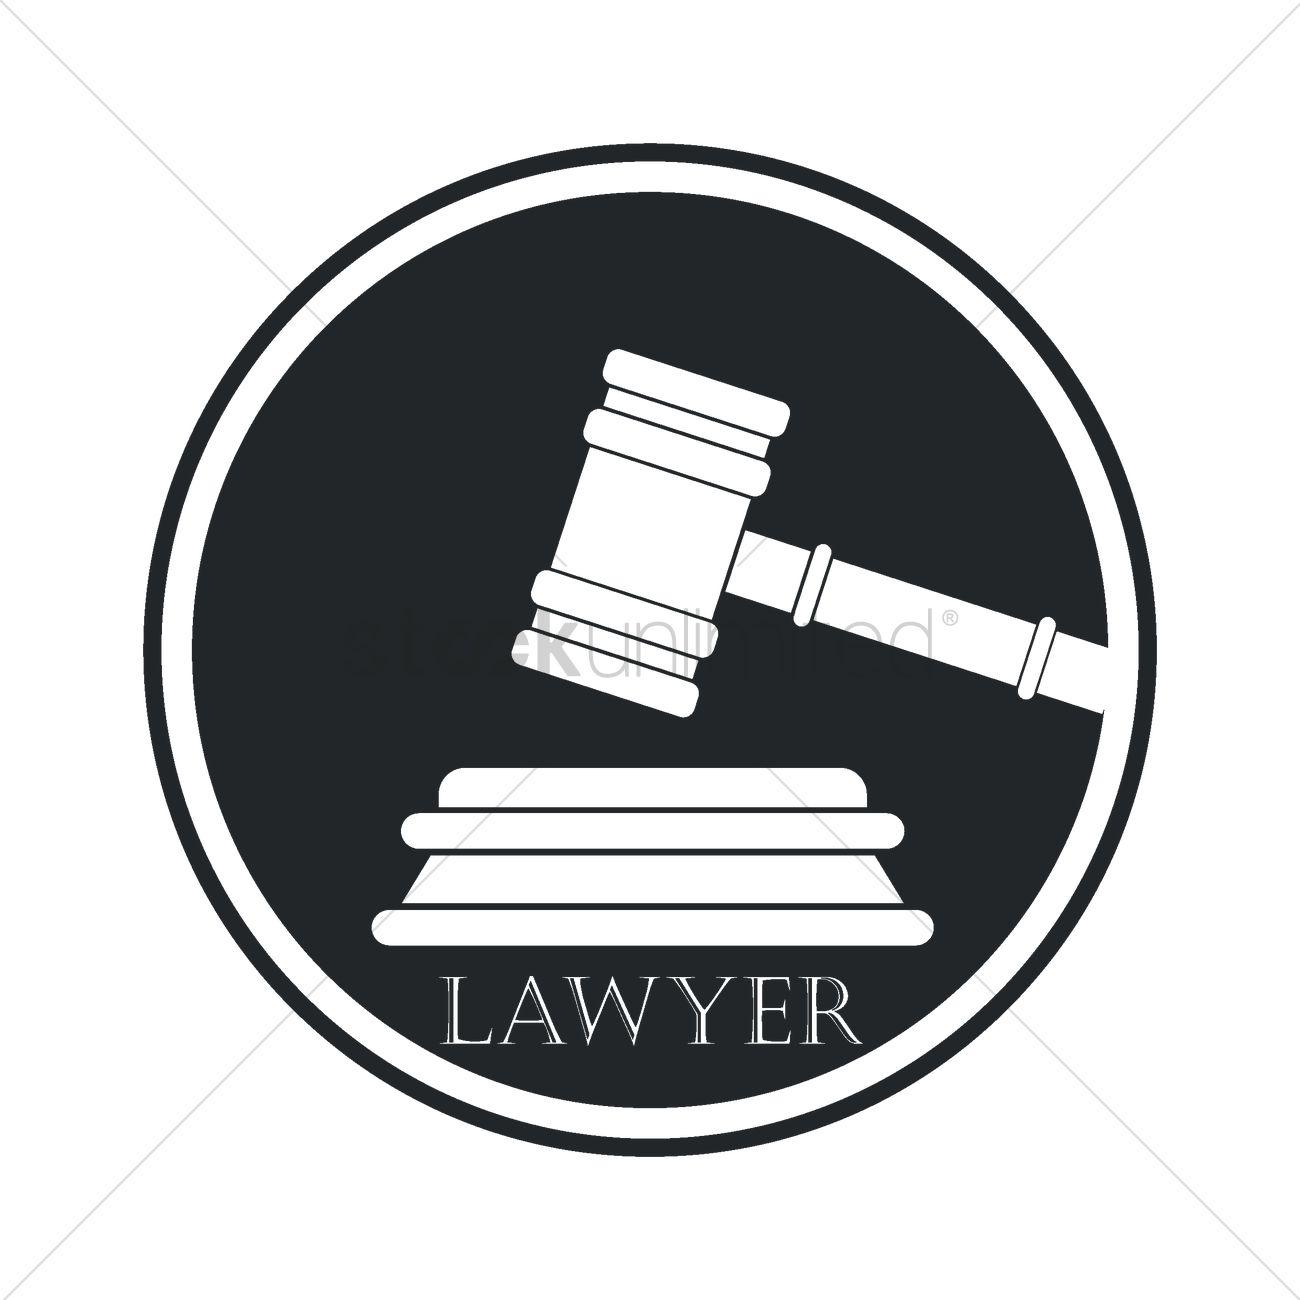 Lawyer Logo - Lawyer logo element Vector Image - 1982953 | StockUnlimited